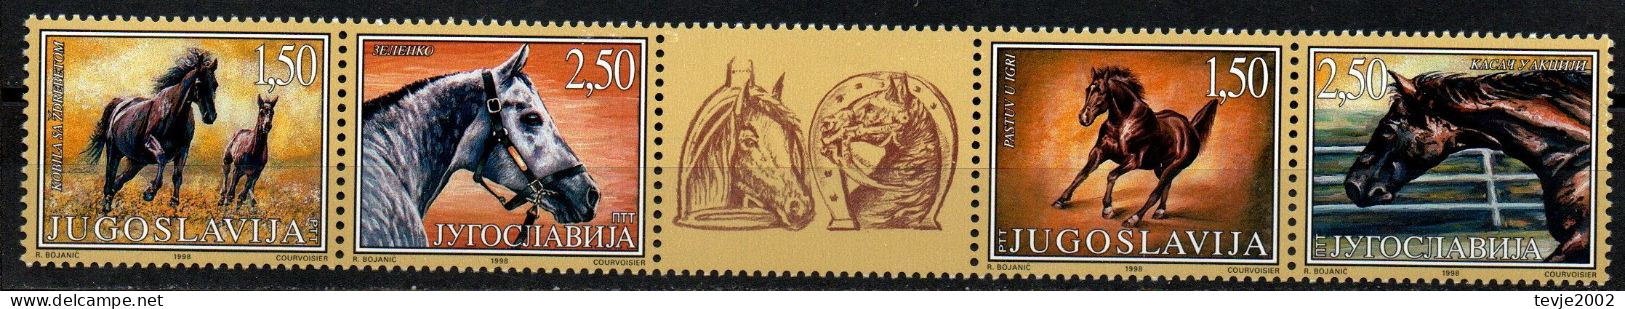 Jugoslawien 1998 - Mi.Nr. 2849 - 2852 - Postfrisch MNH - Tiere Animals Pferde Horses - Caballos